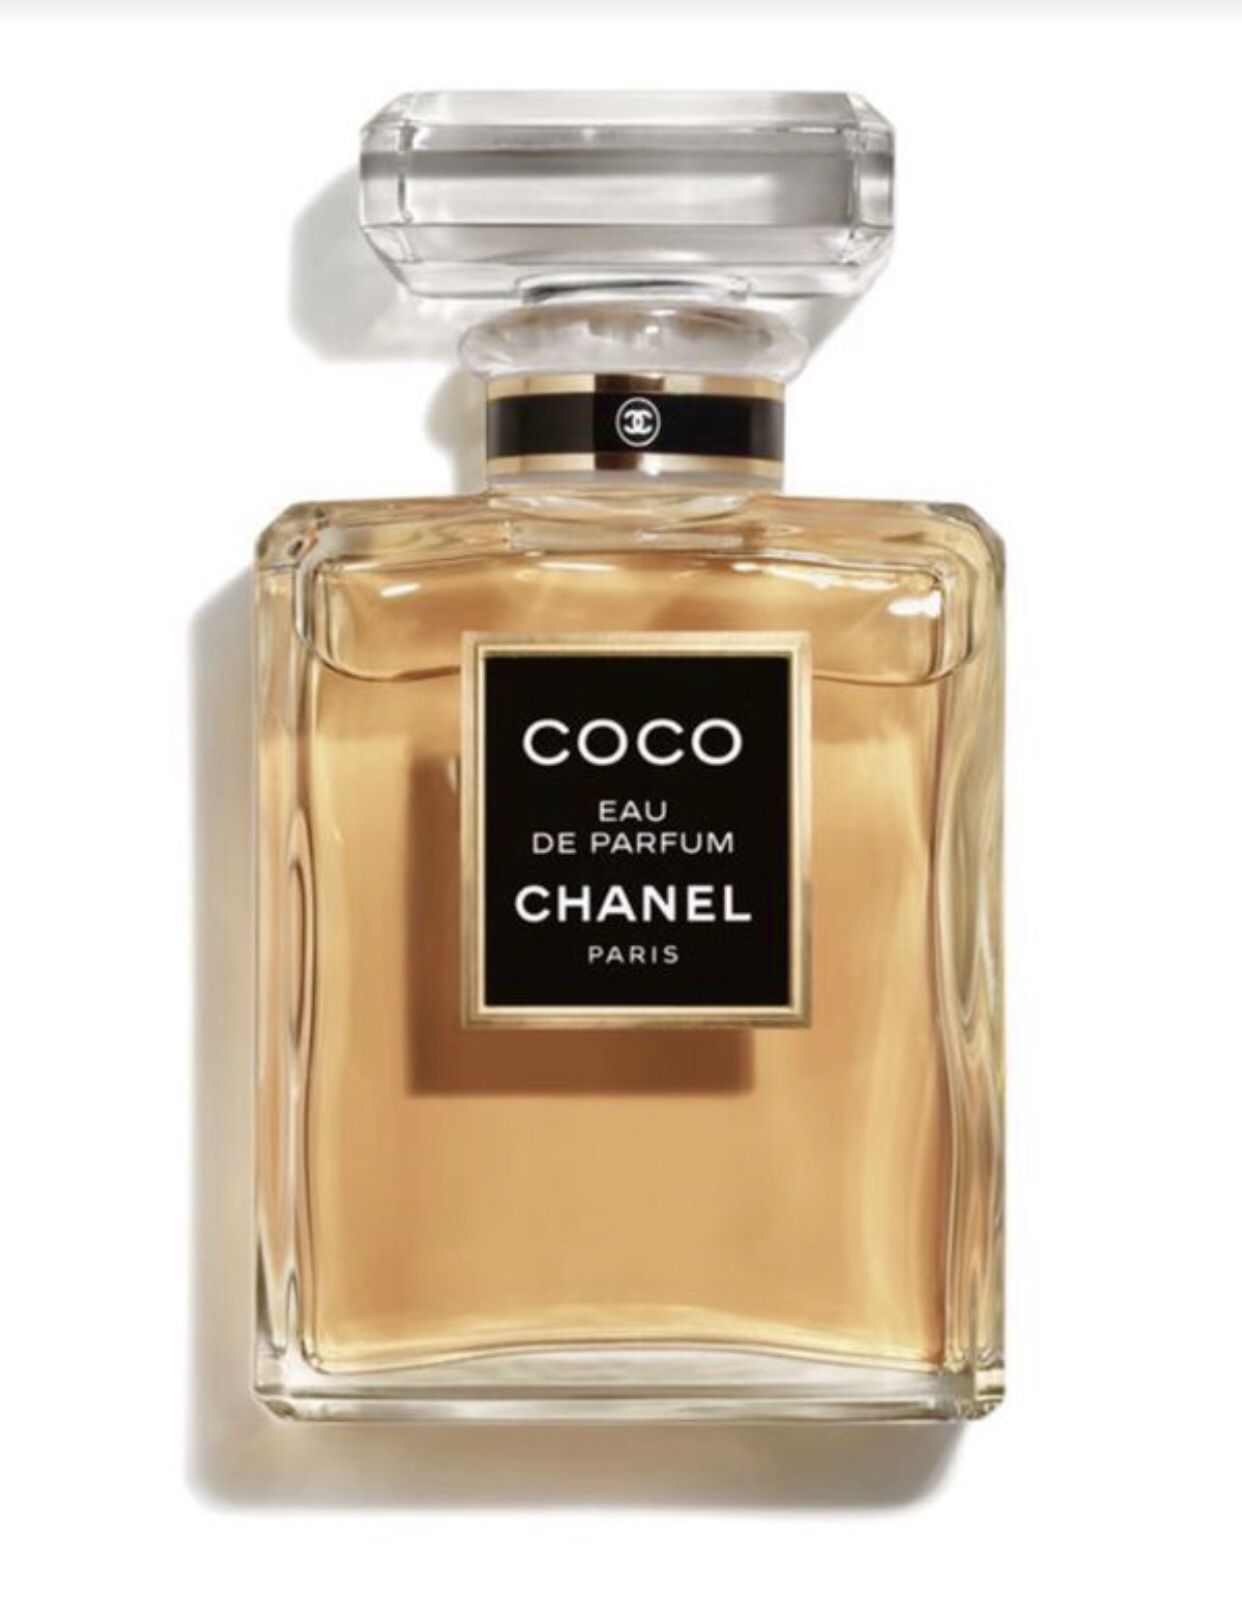 COCO Chanel Paris Perfume (Brand New) 35ml for sale Christmas Gift